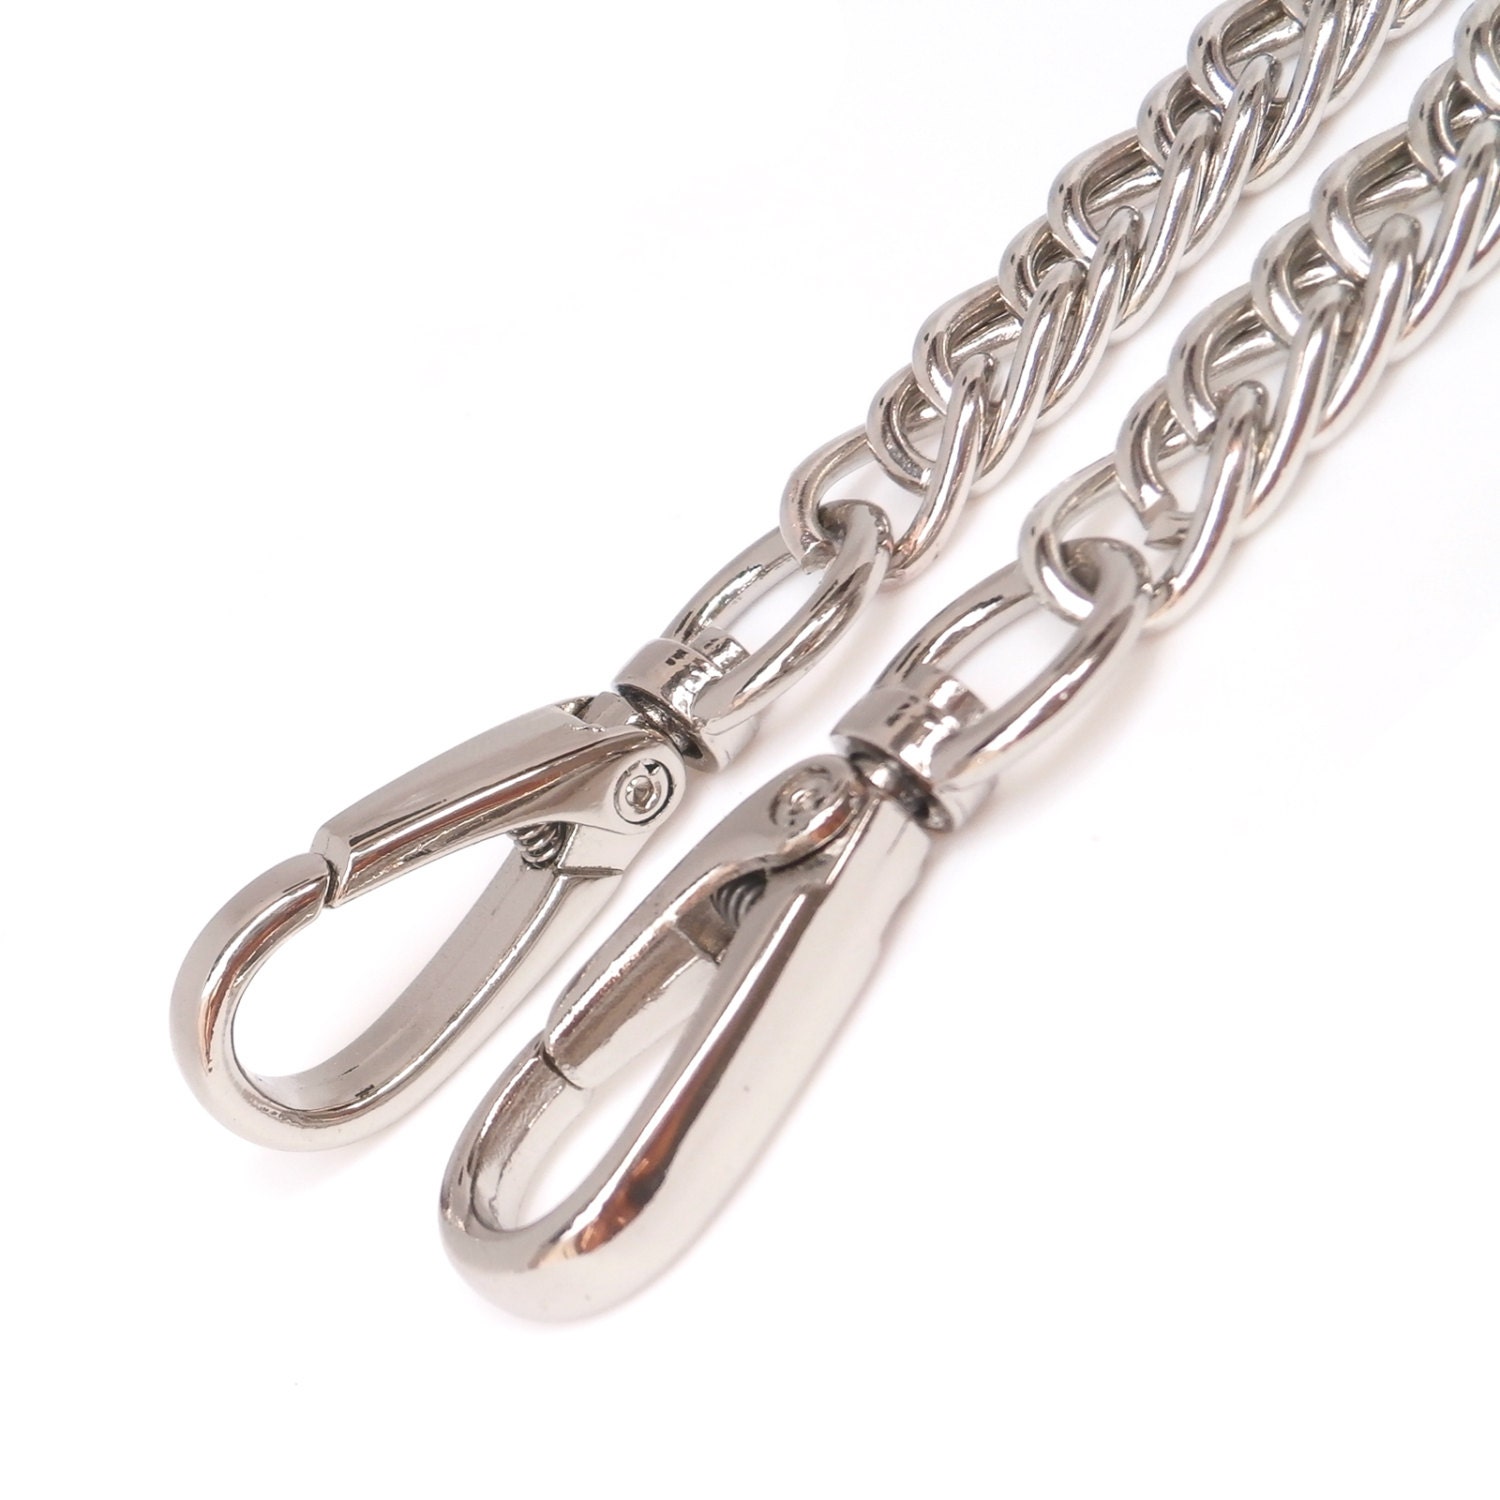 Top Grade 10mm Width Silver Flat Chains Purse Metal Strap